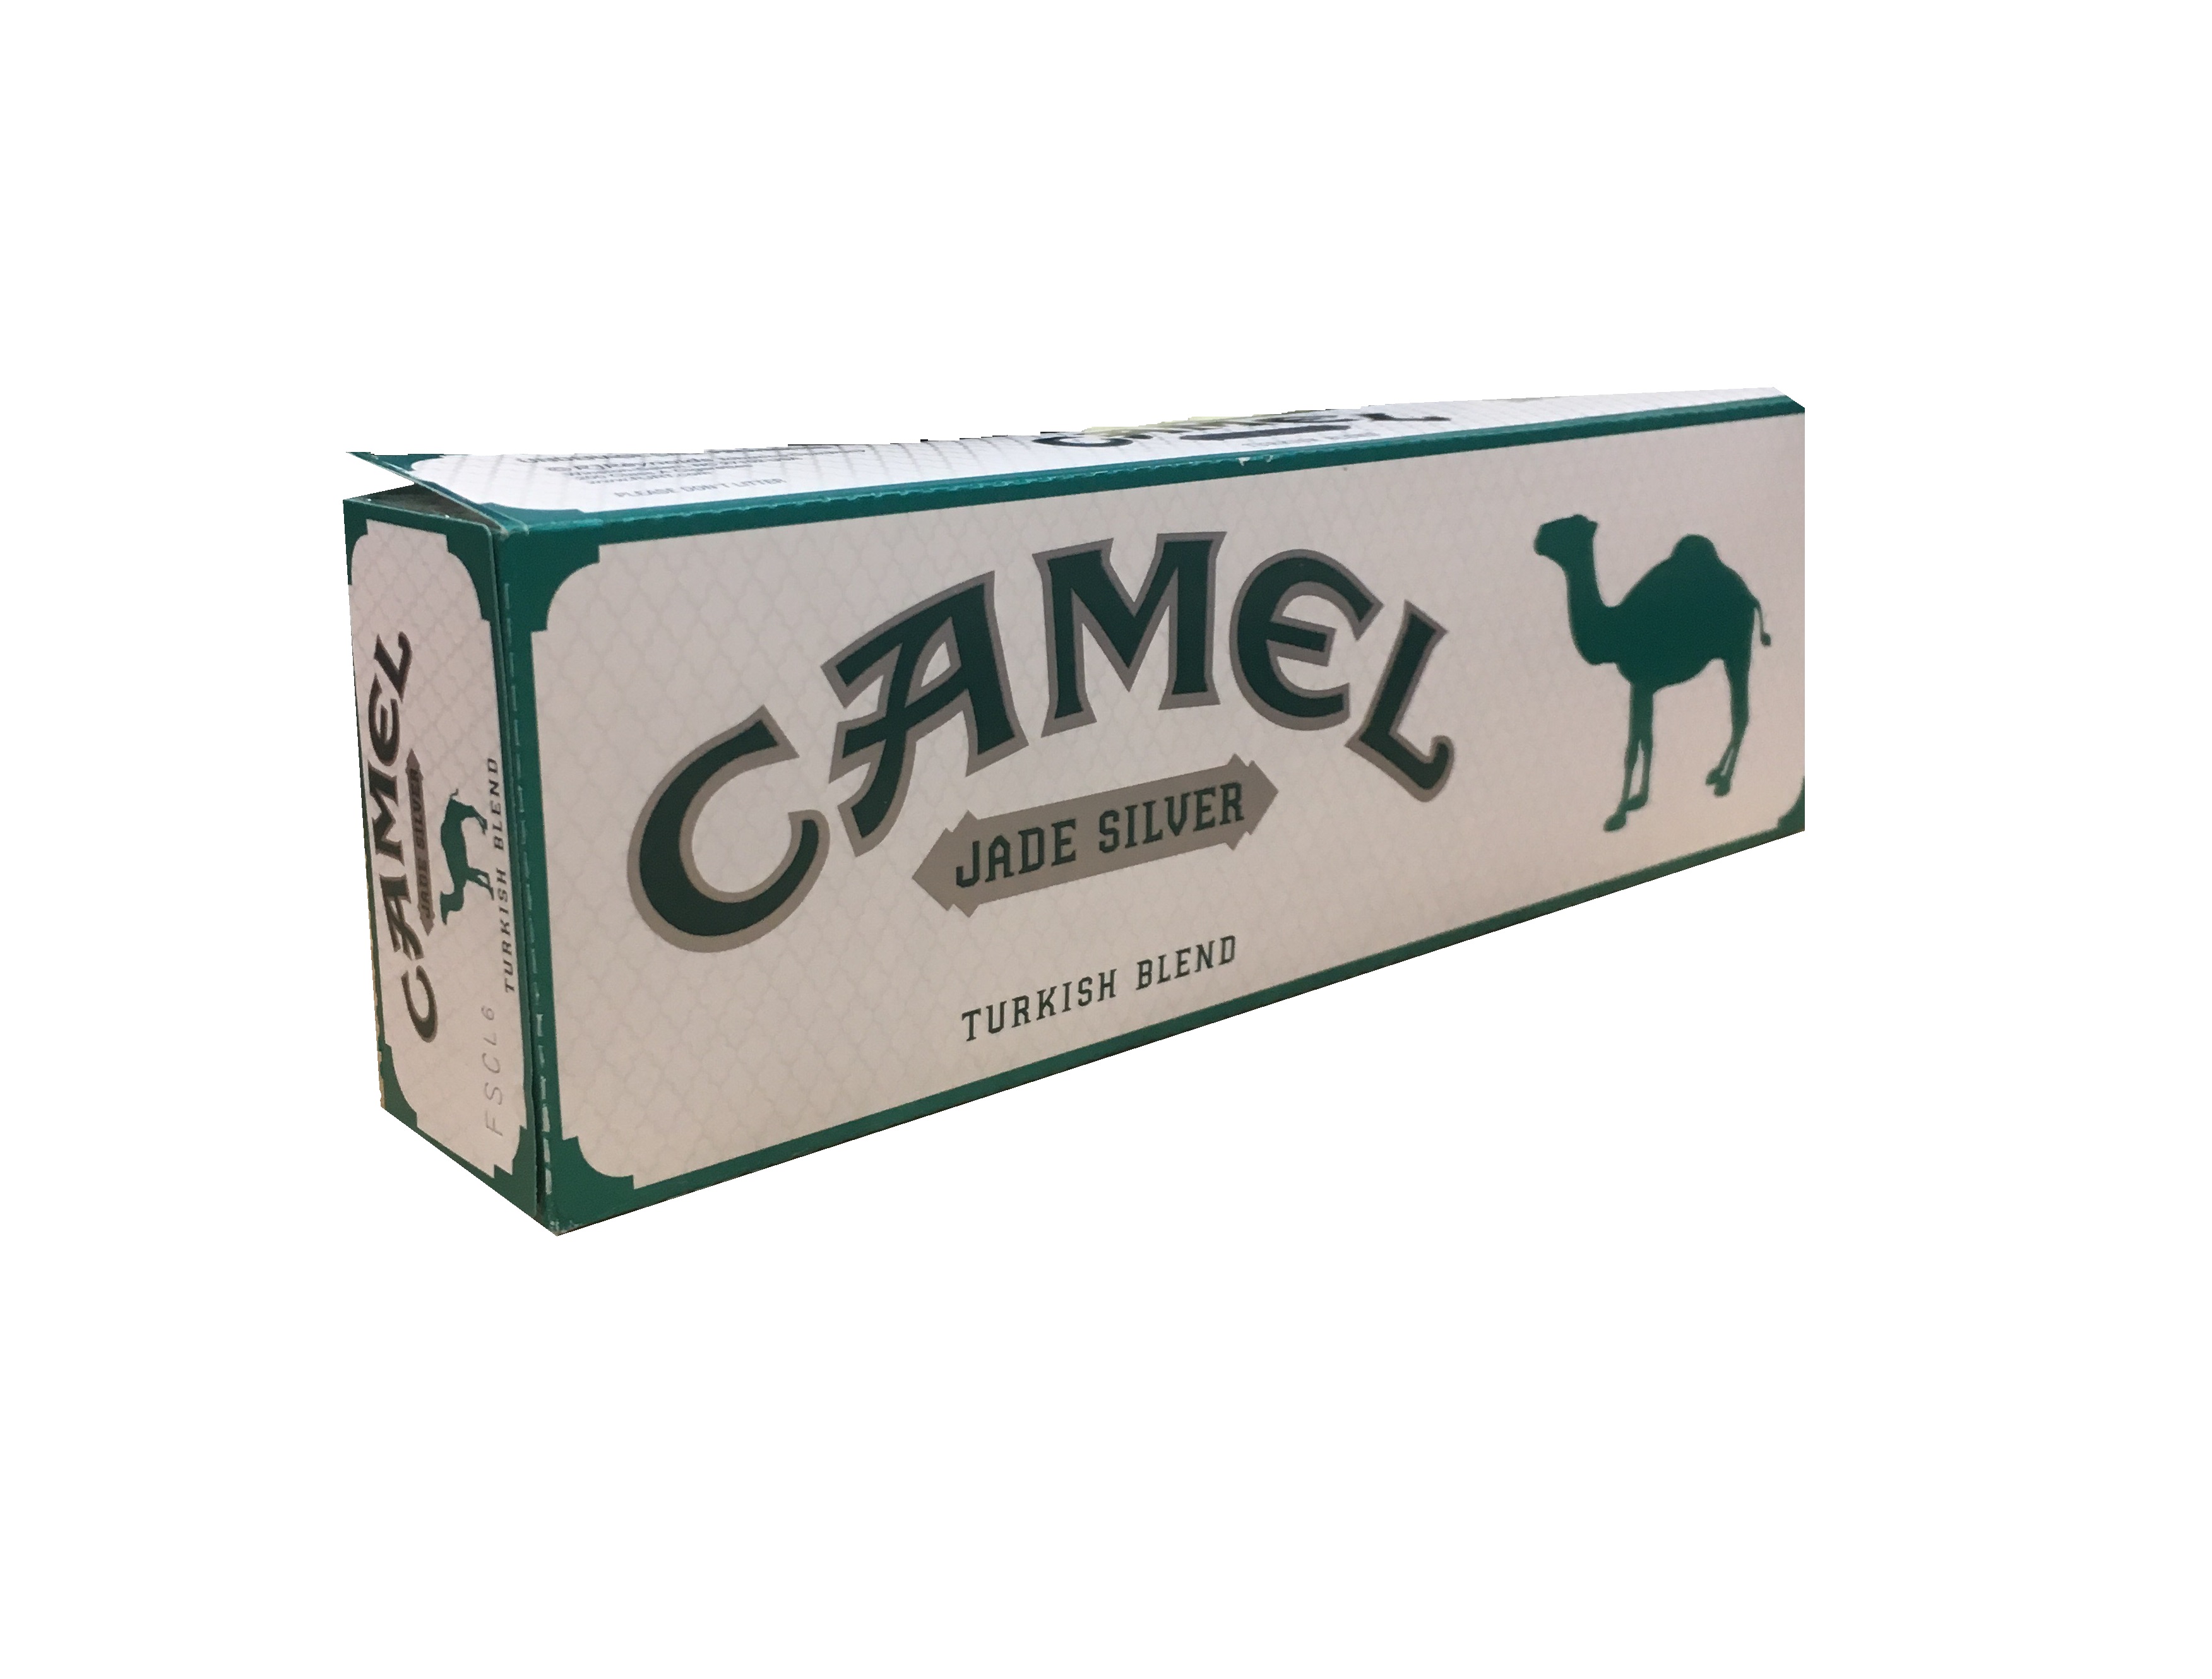 Camel jade silver box